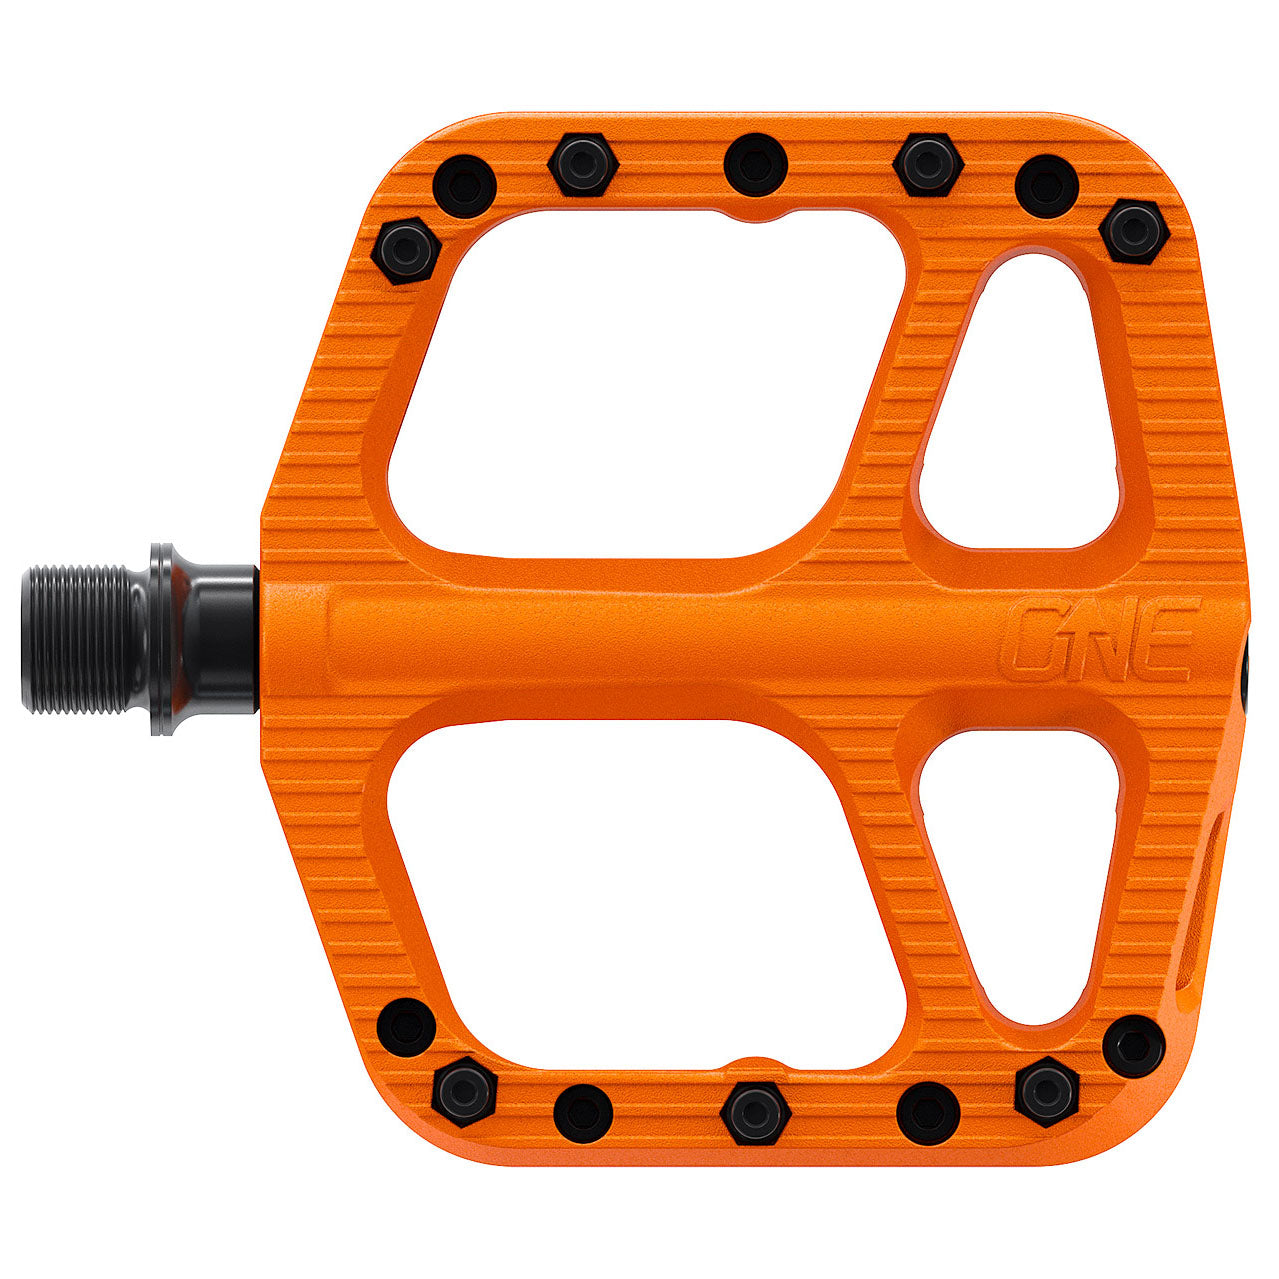 OneUp Components Small Comp Platform Pedals Orange